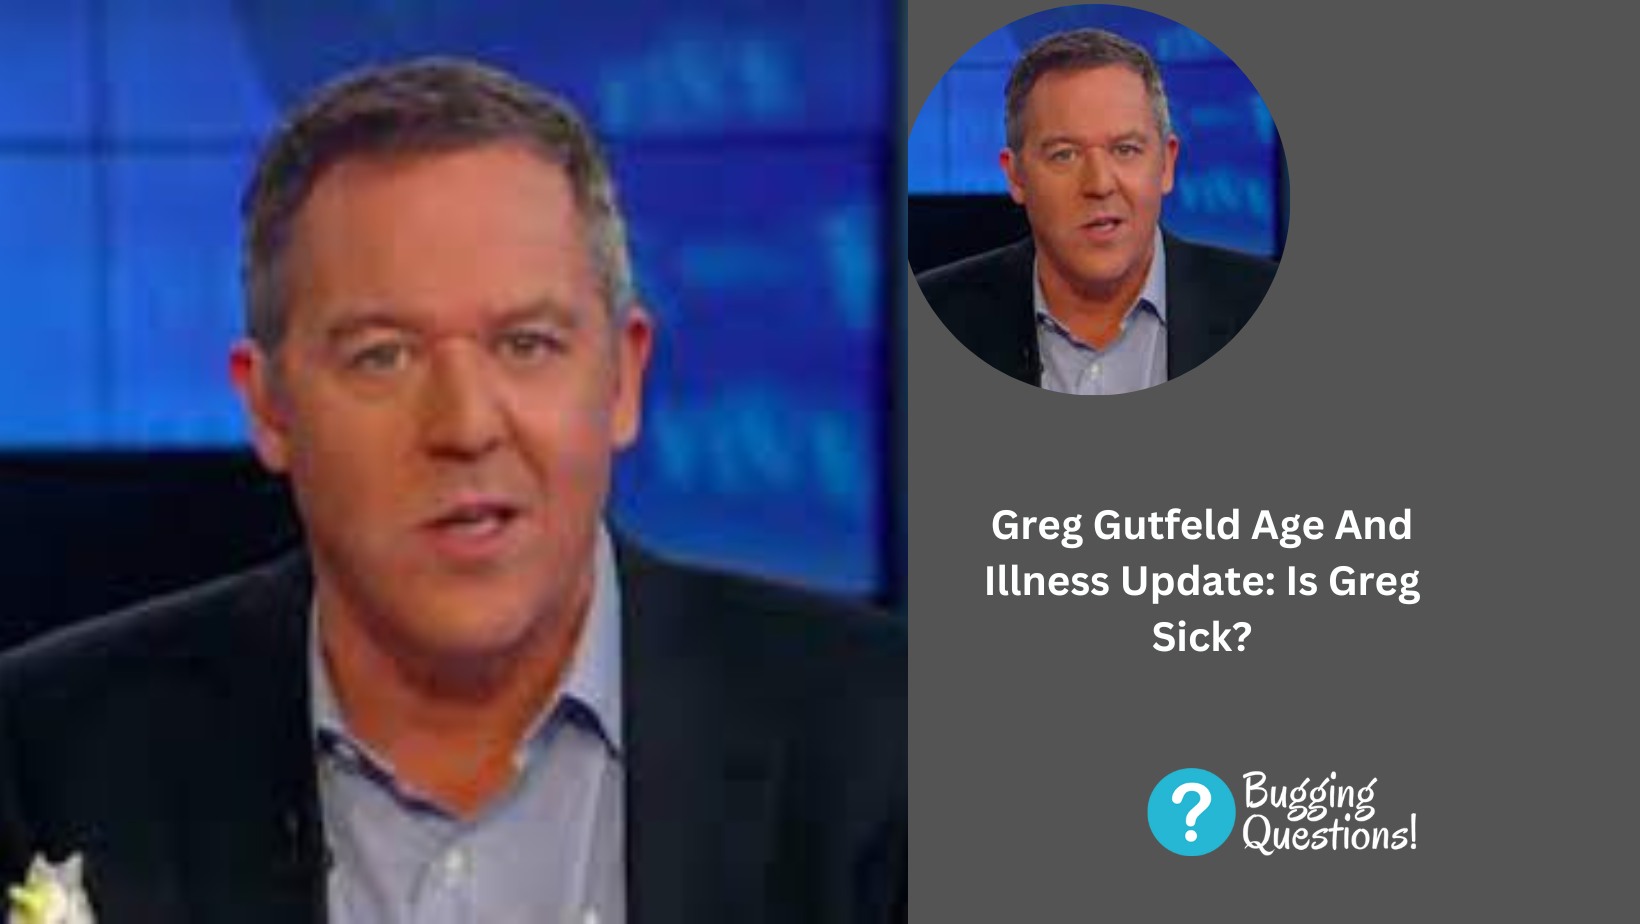 Greg Gutfeld Age And Illness Update: Is Greg Sick?